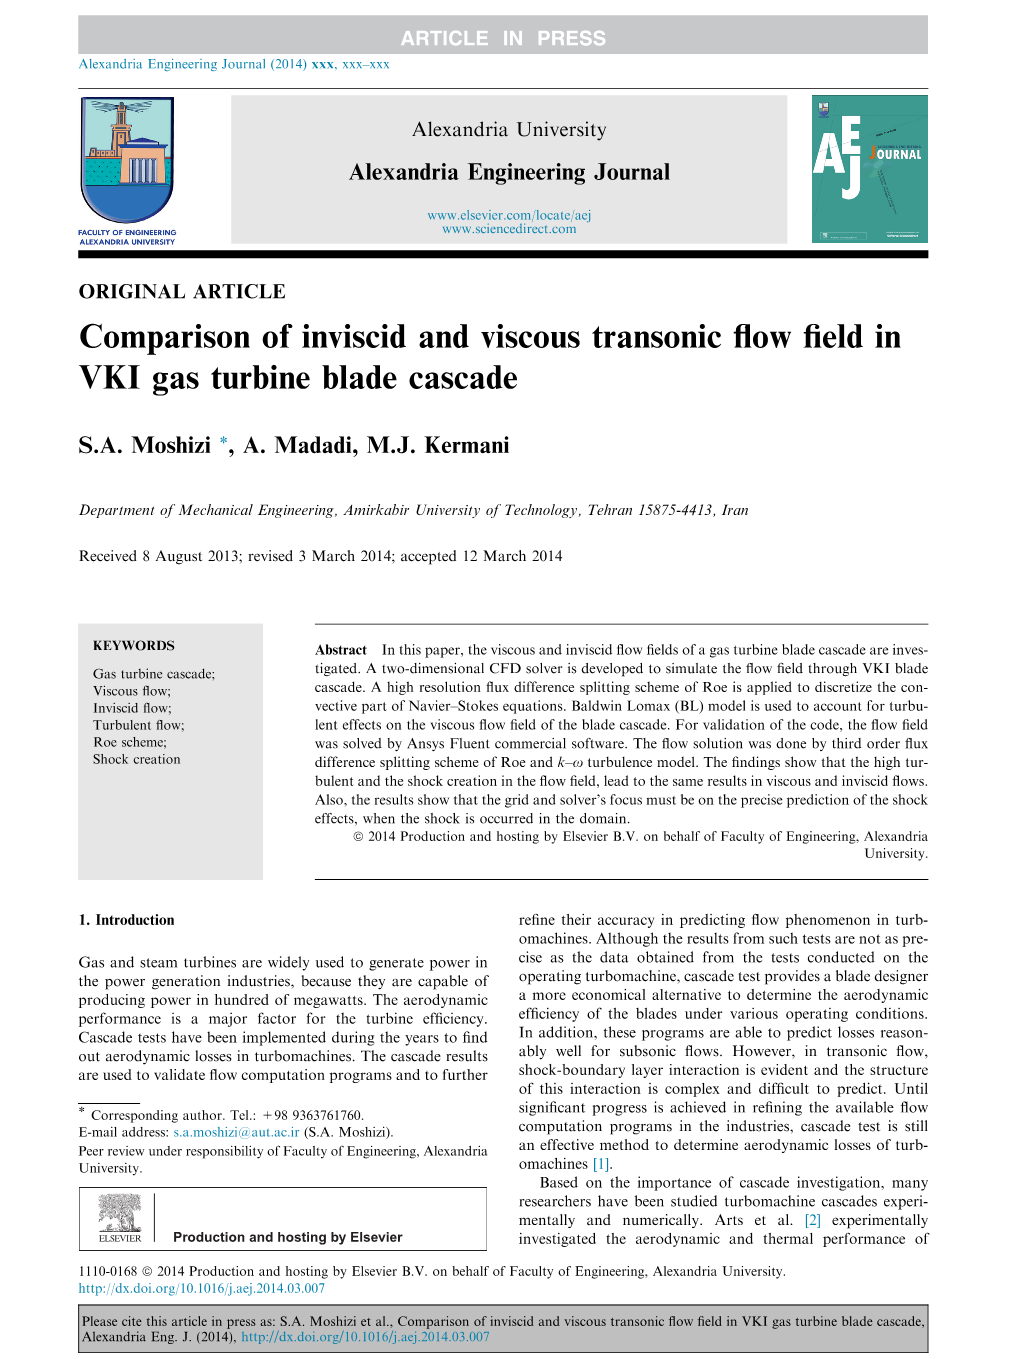 Comparison of Inviscid and Viscous Transonic Flow Field in VKI Gas